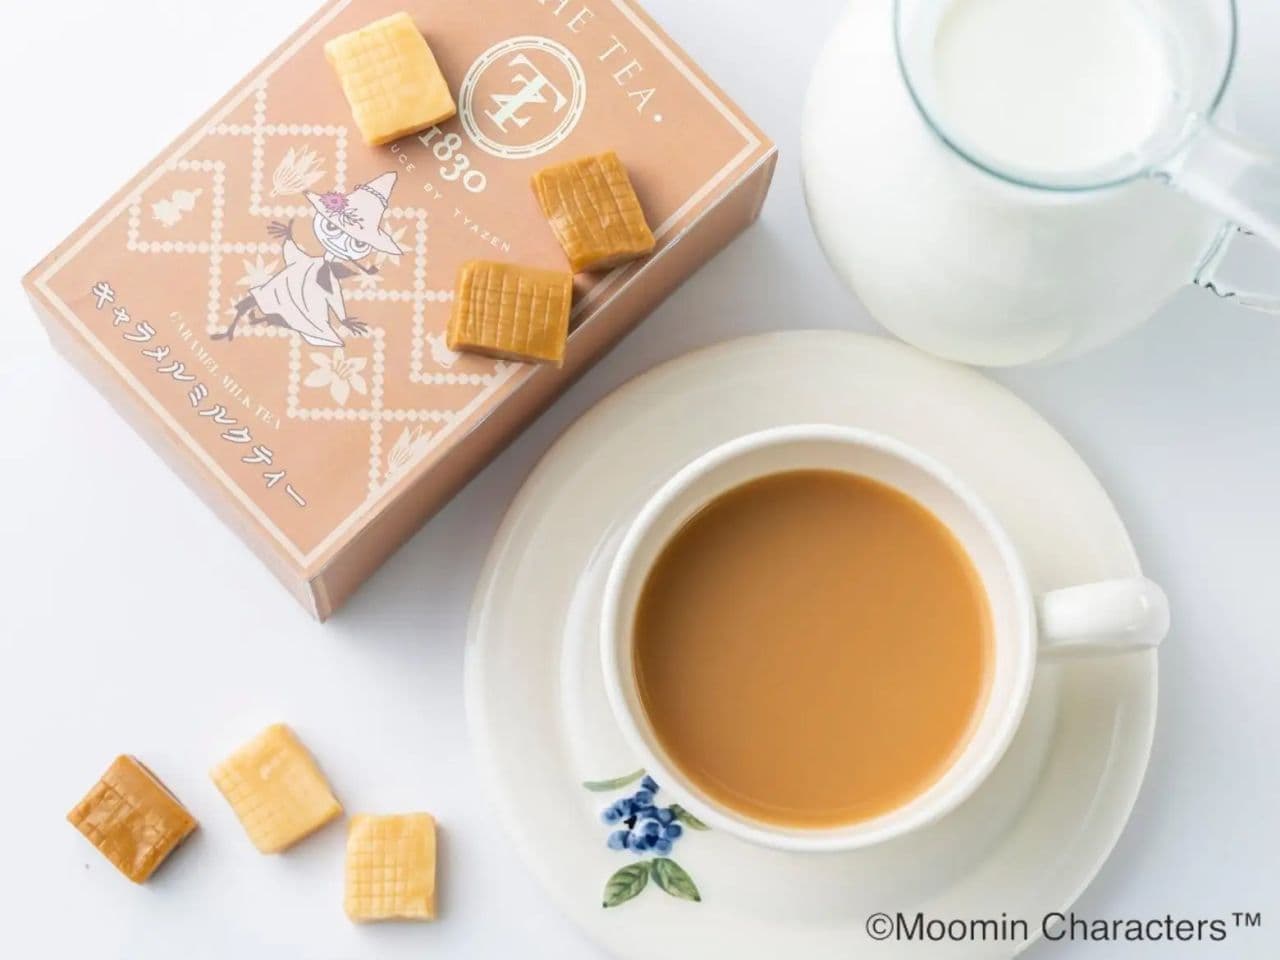 Moomin flavored tea "Caramel Milk Tea